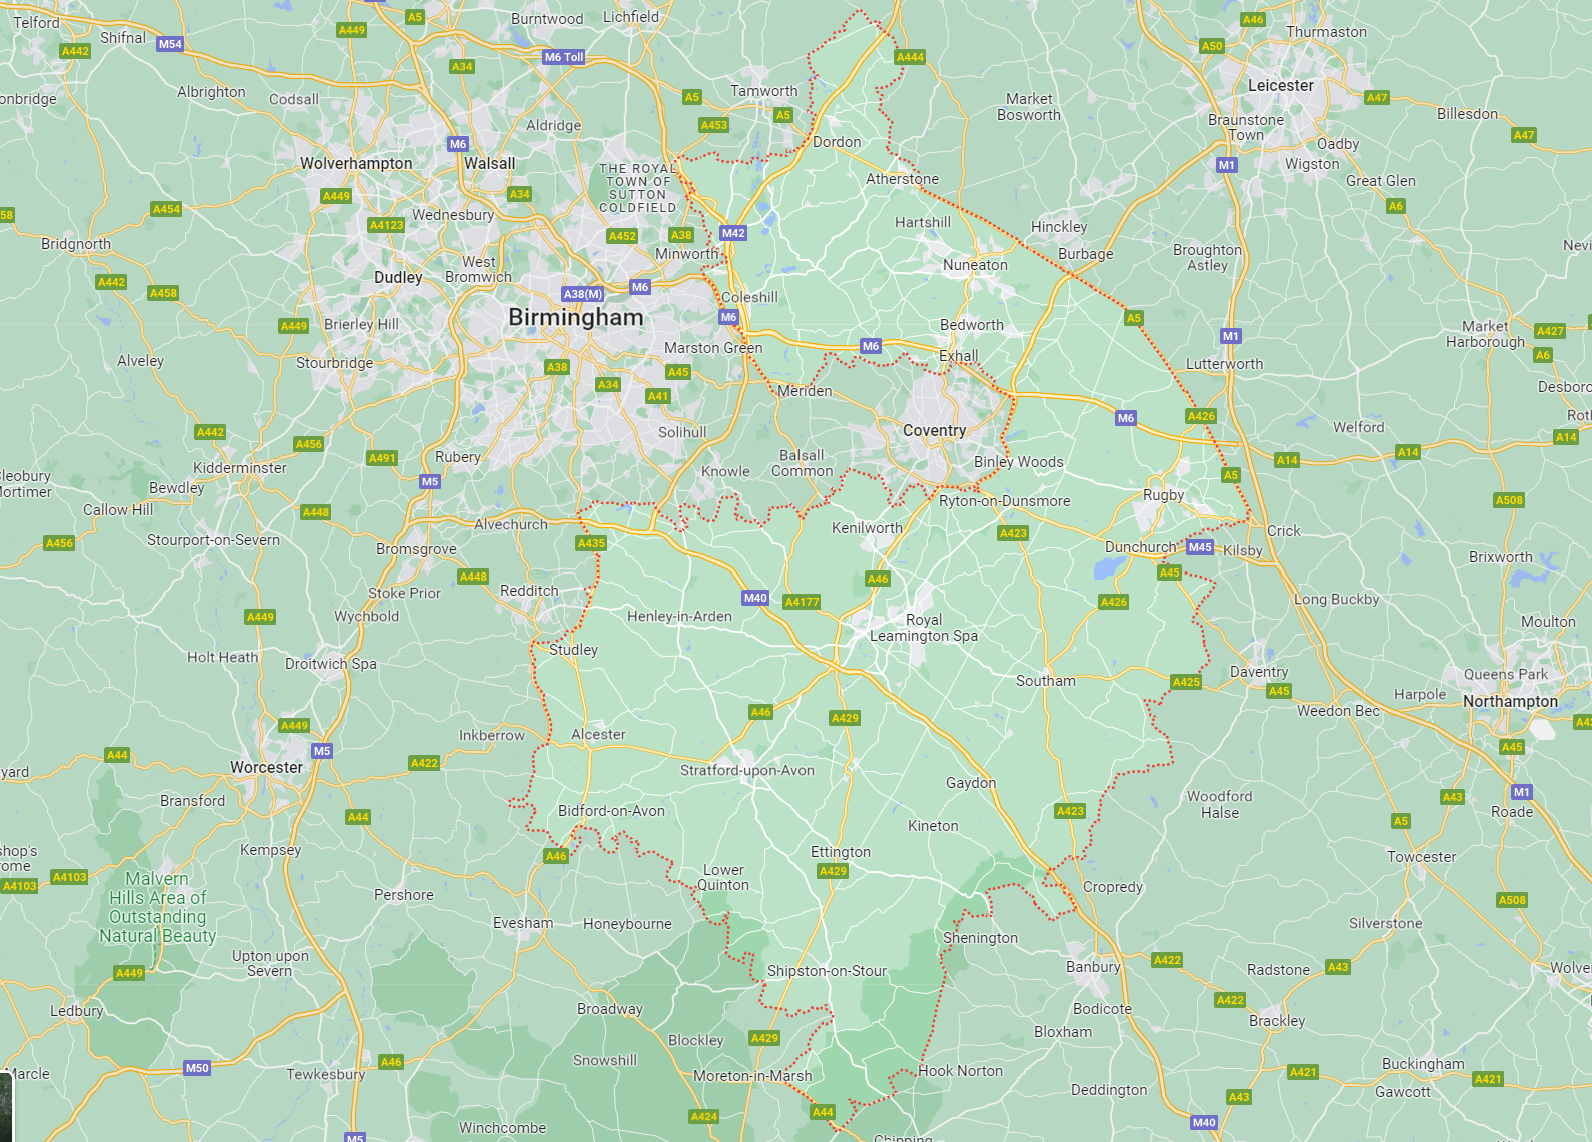 Map of Warwickshire area